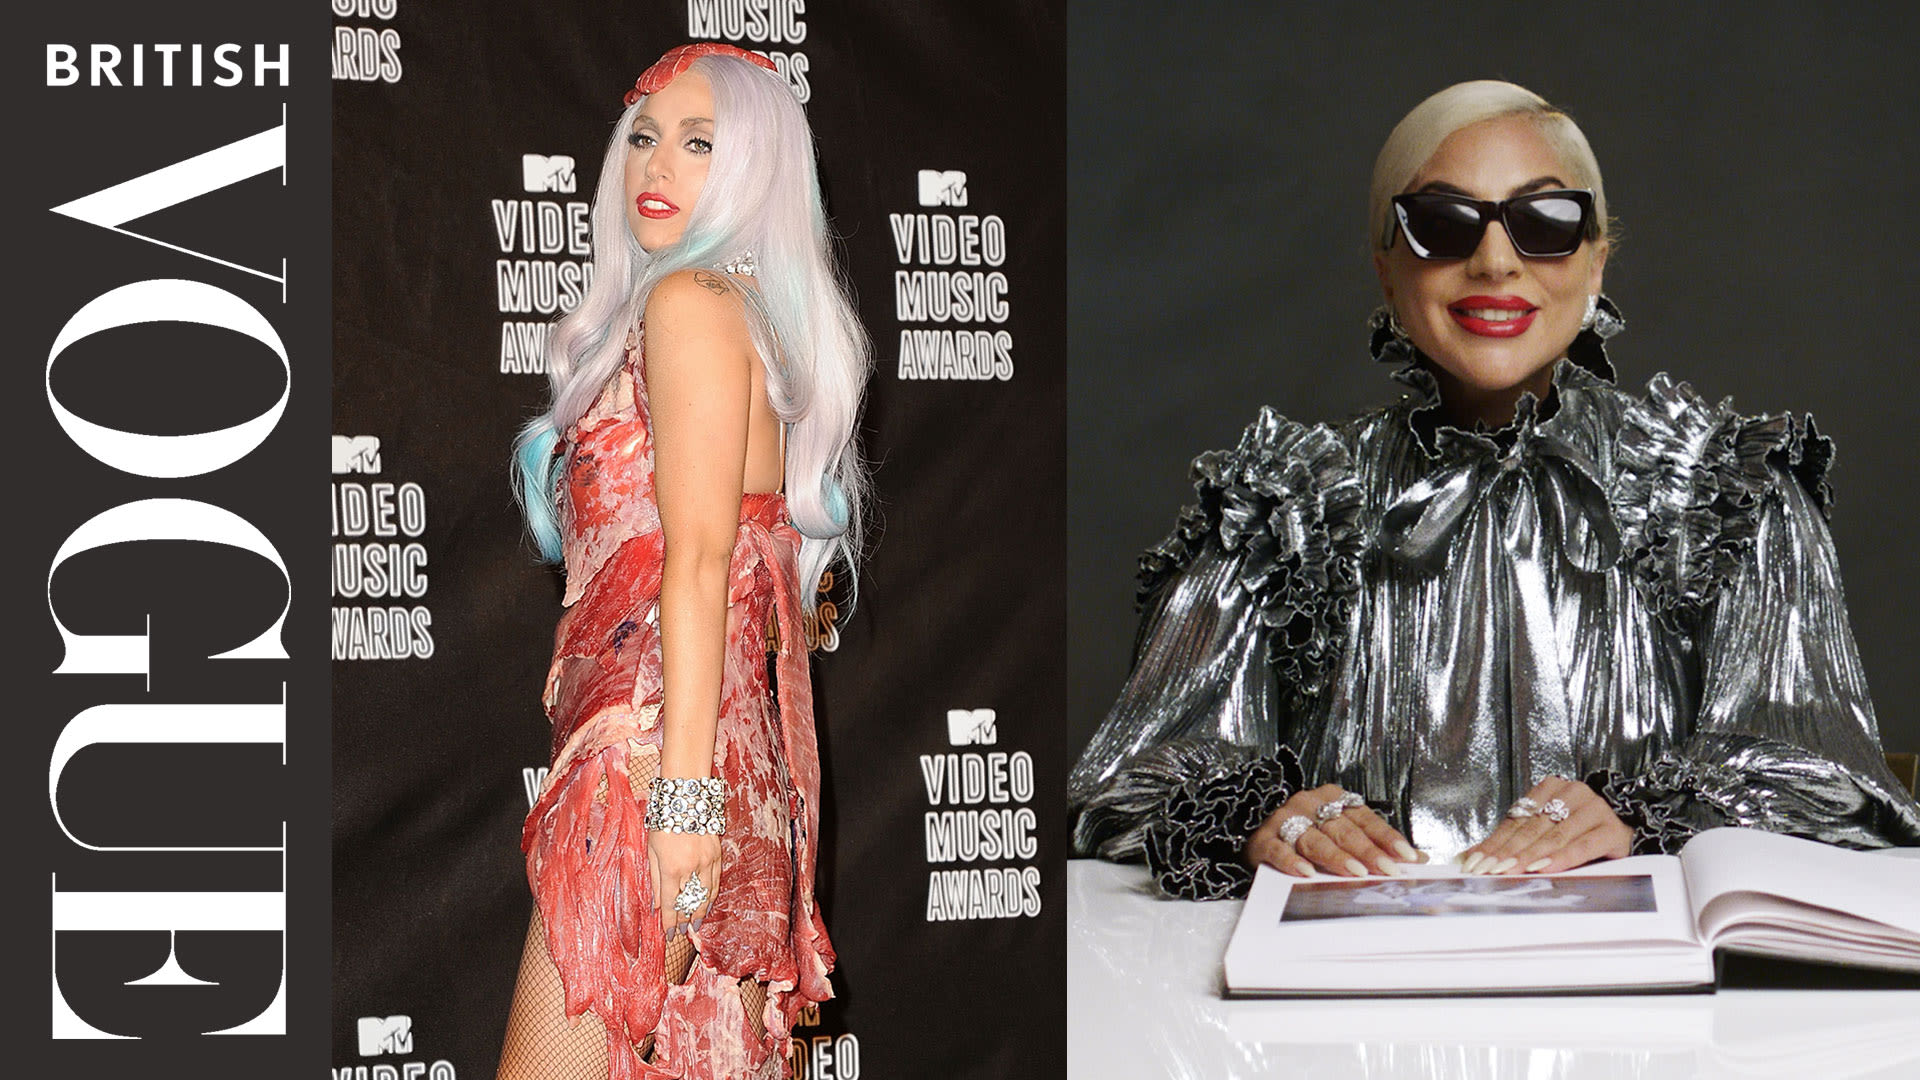 Meat dress of Lady Gaga - Wikipedia